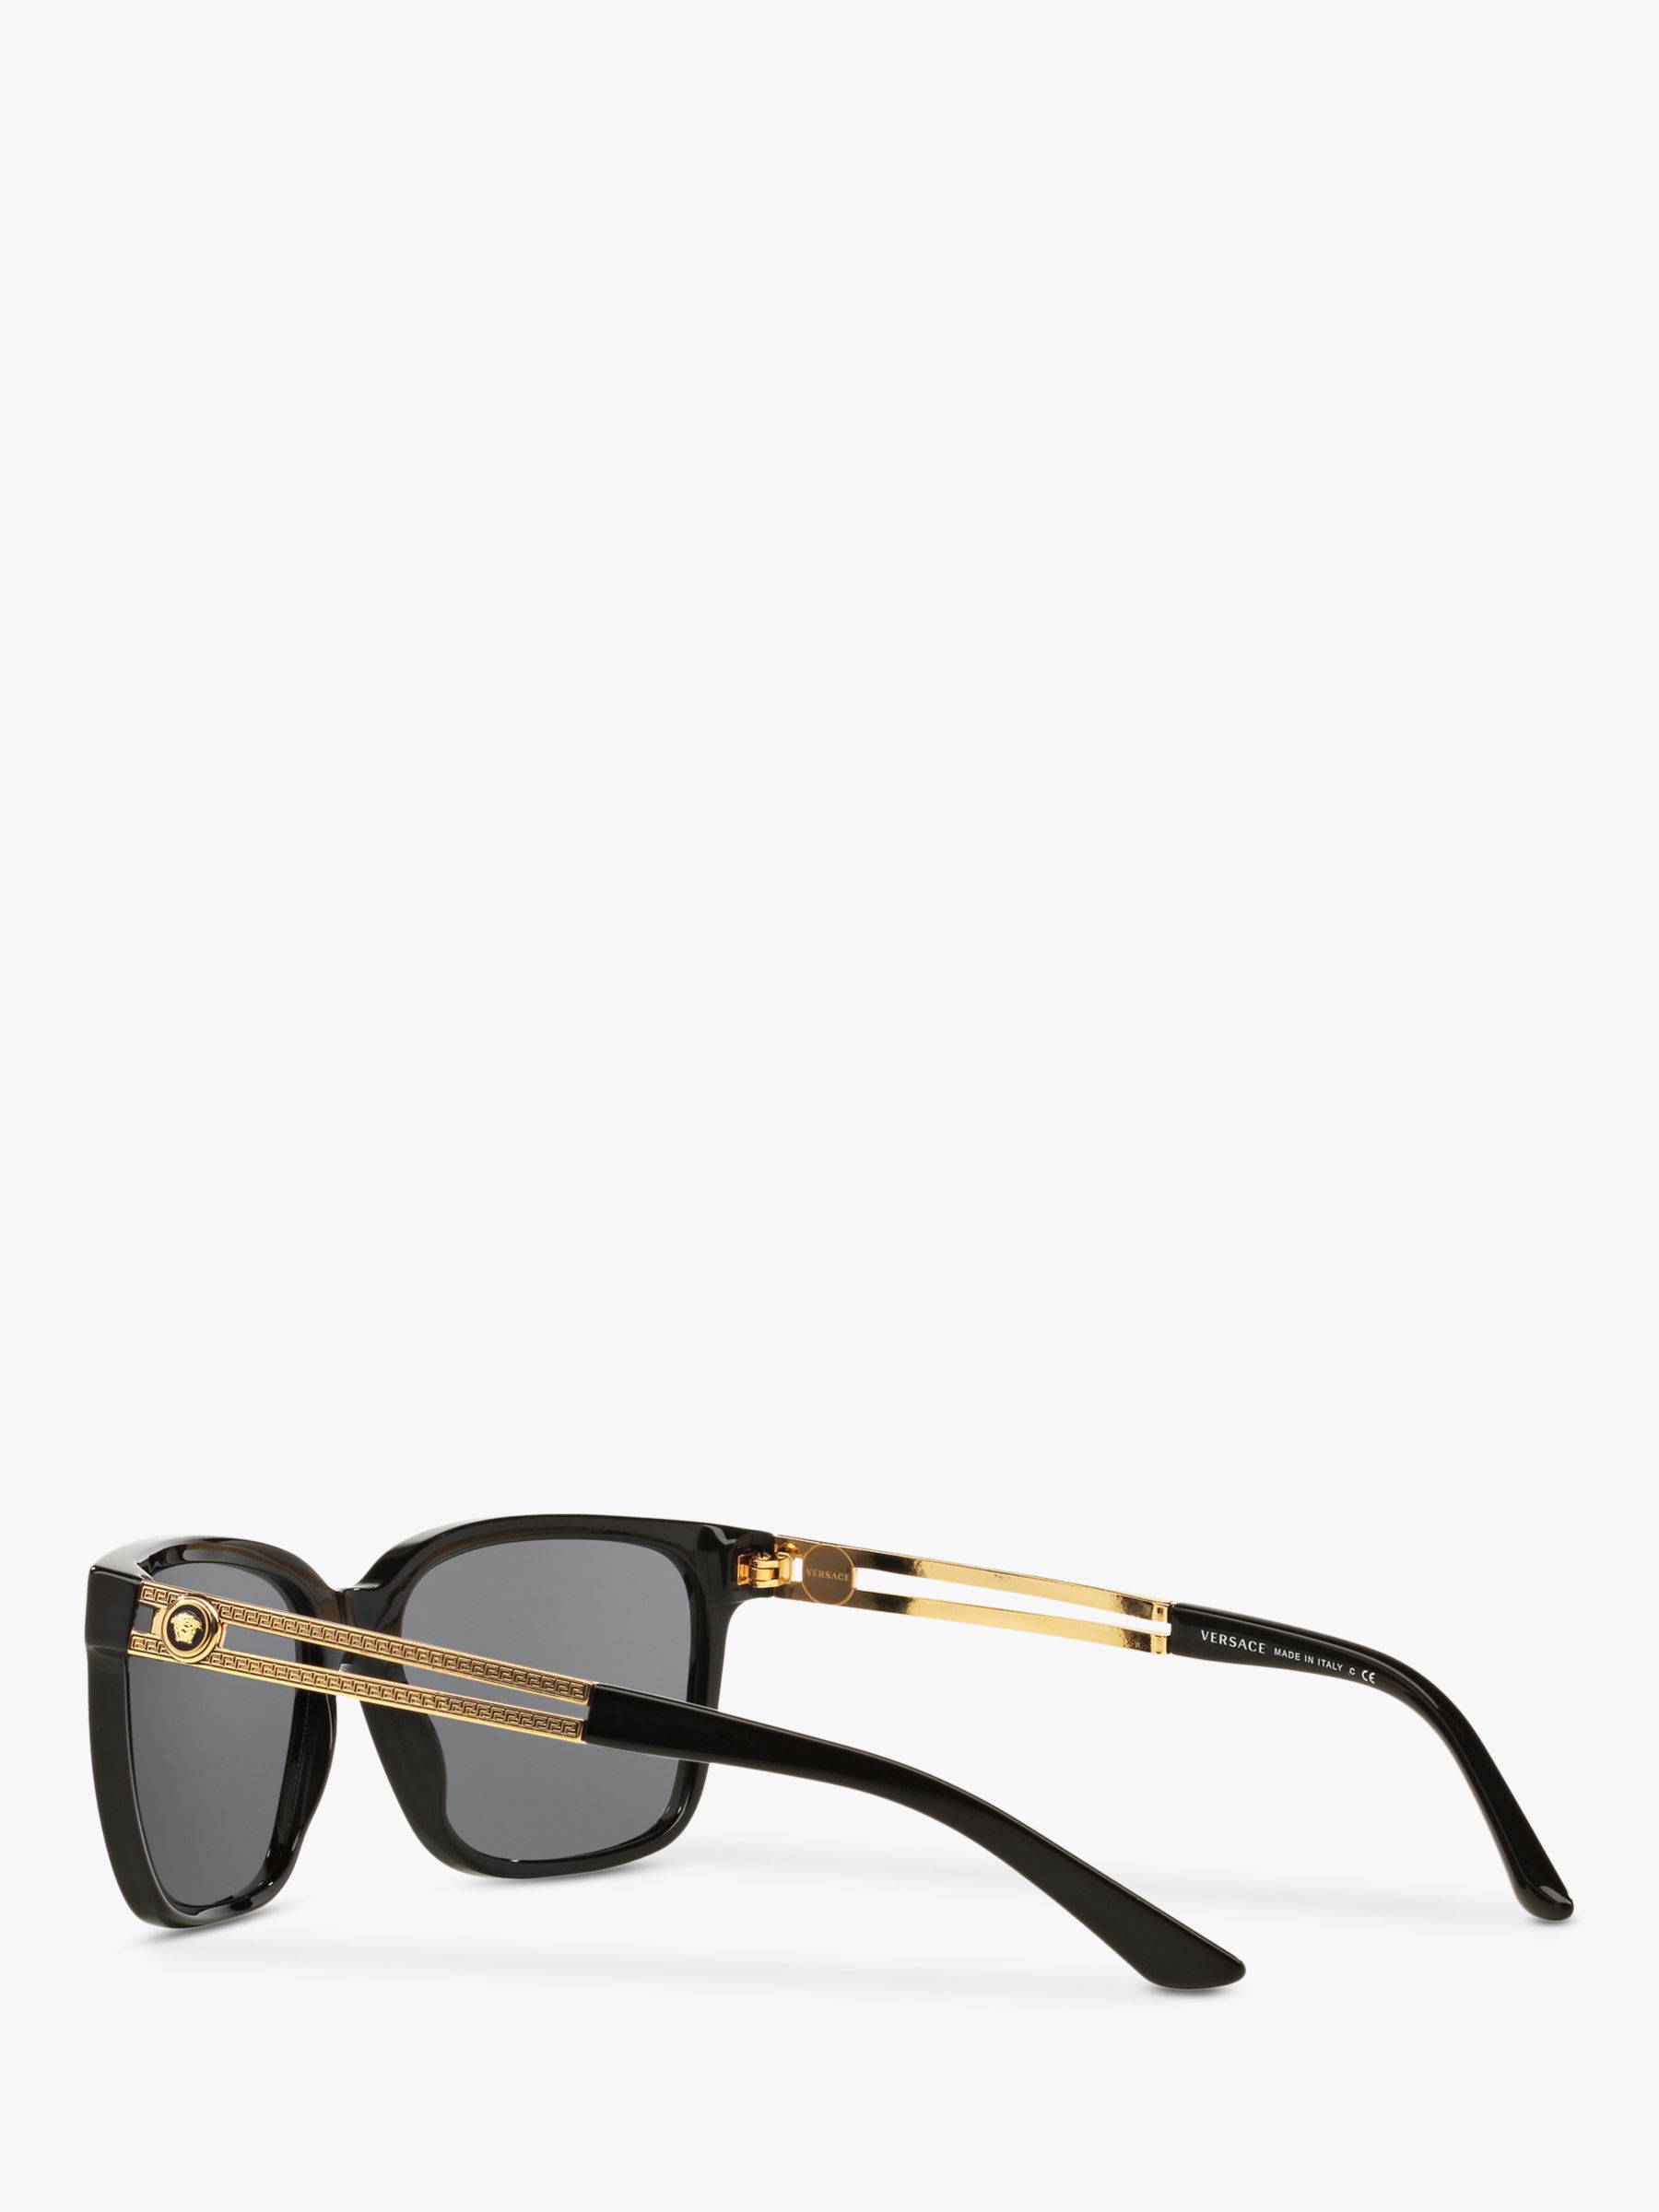 Versace VE4307 Men's Square Sunglasses, Black/Grey at John Lewis u0026 Partners